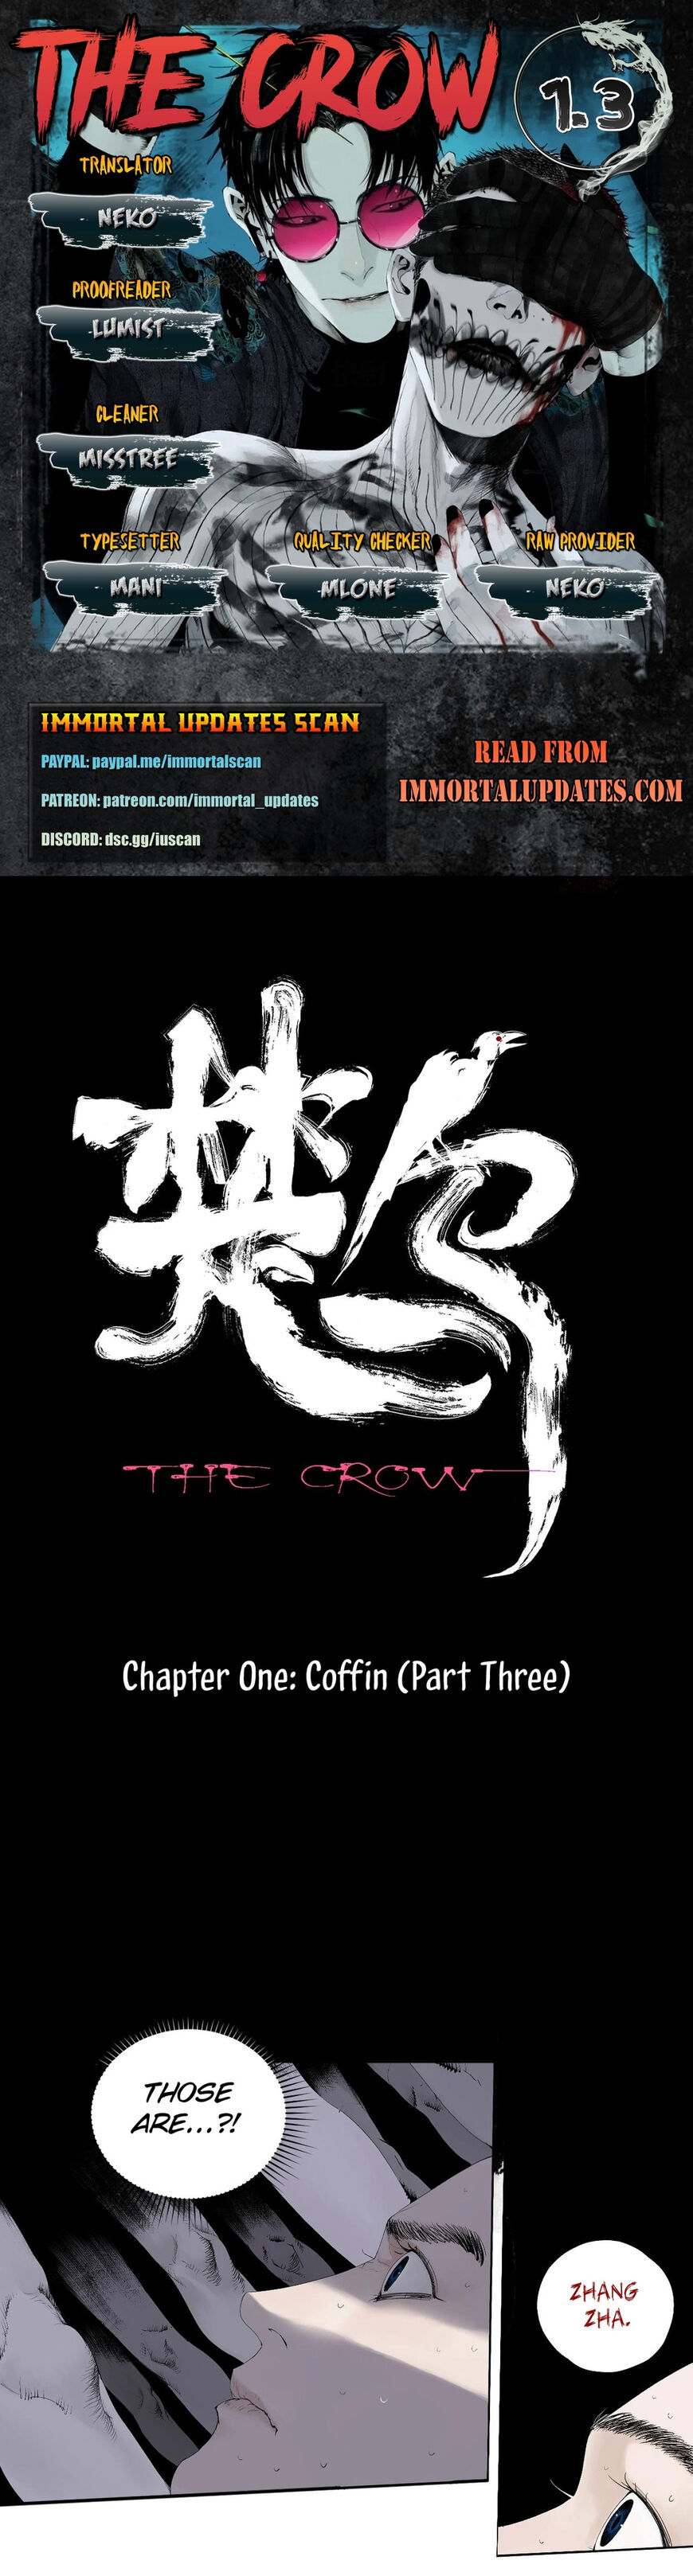 The Night Crow 1.3